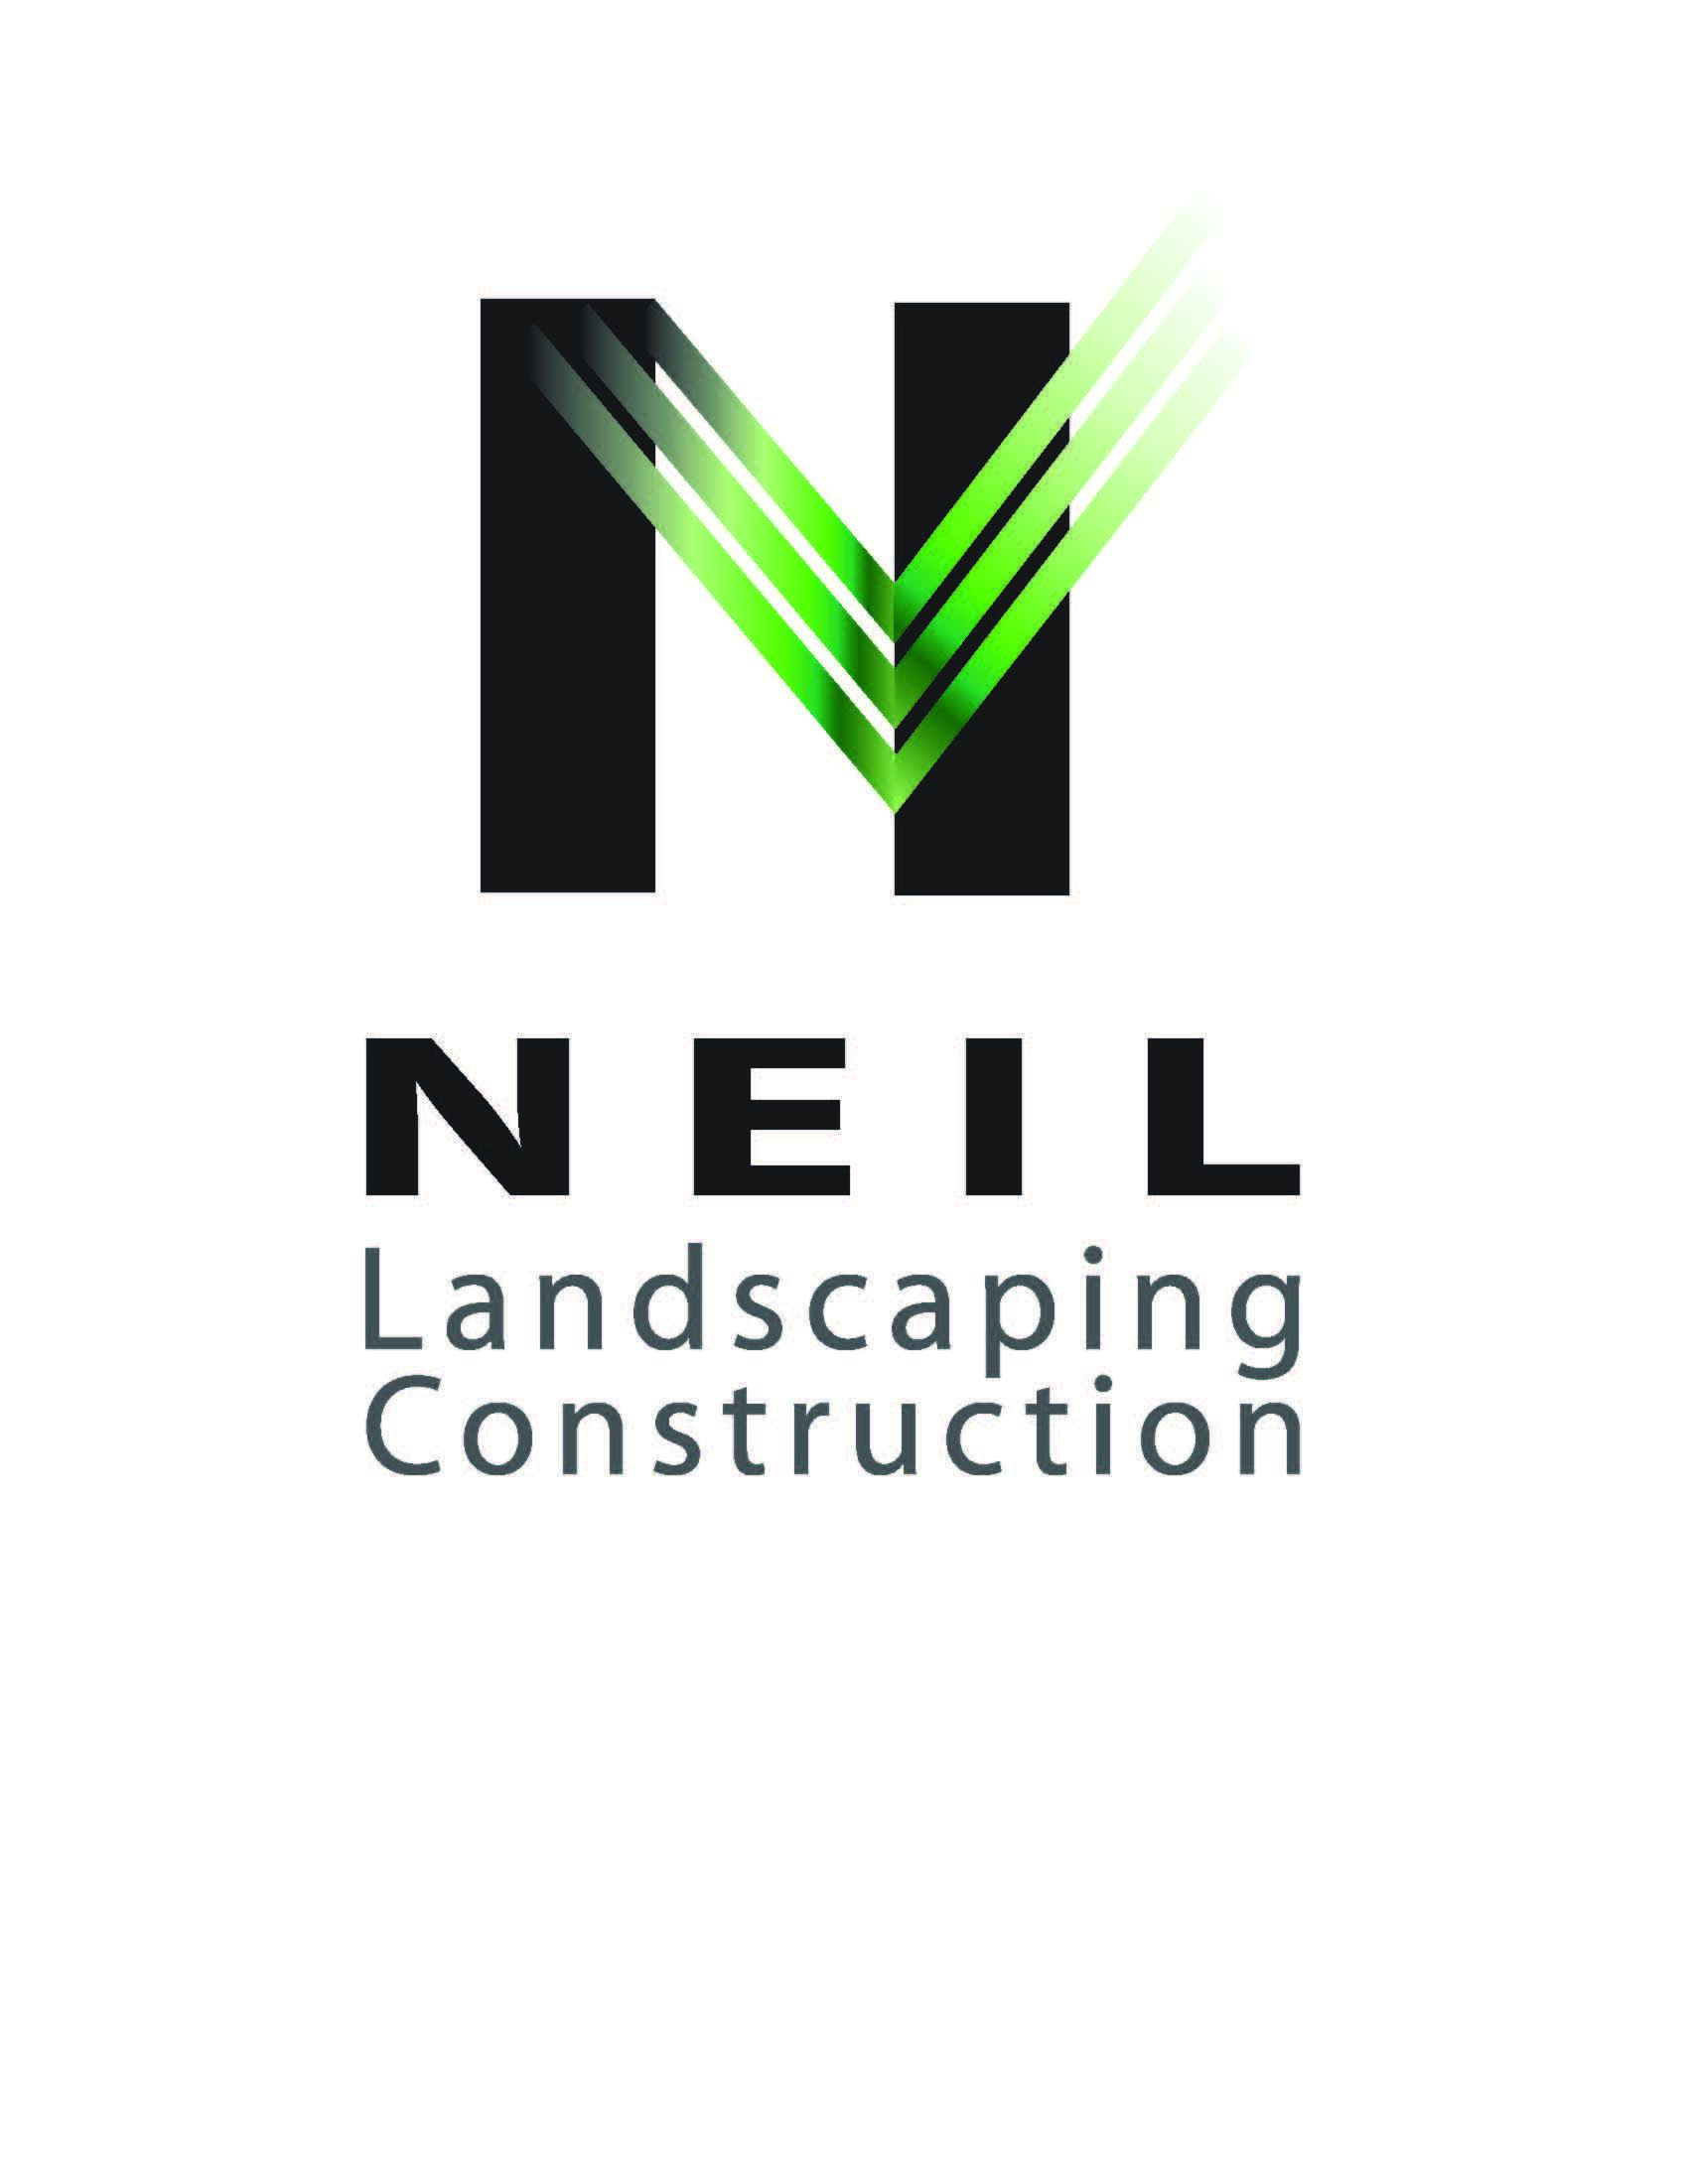 Neil Landscaping Construction